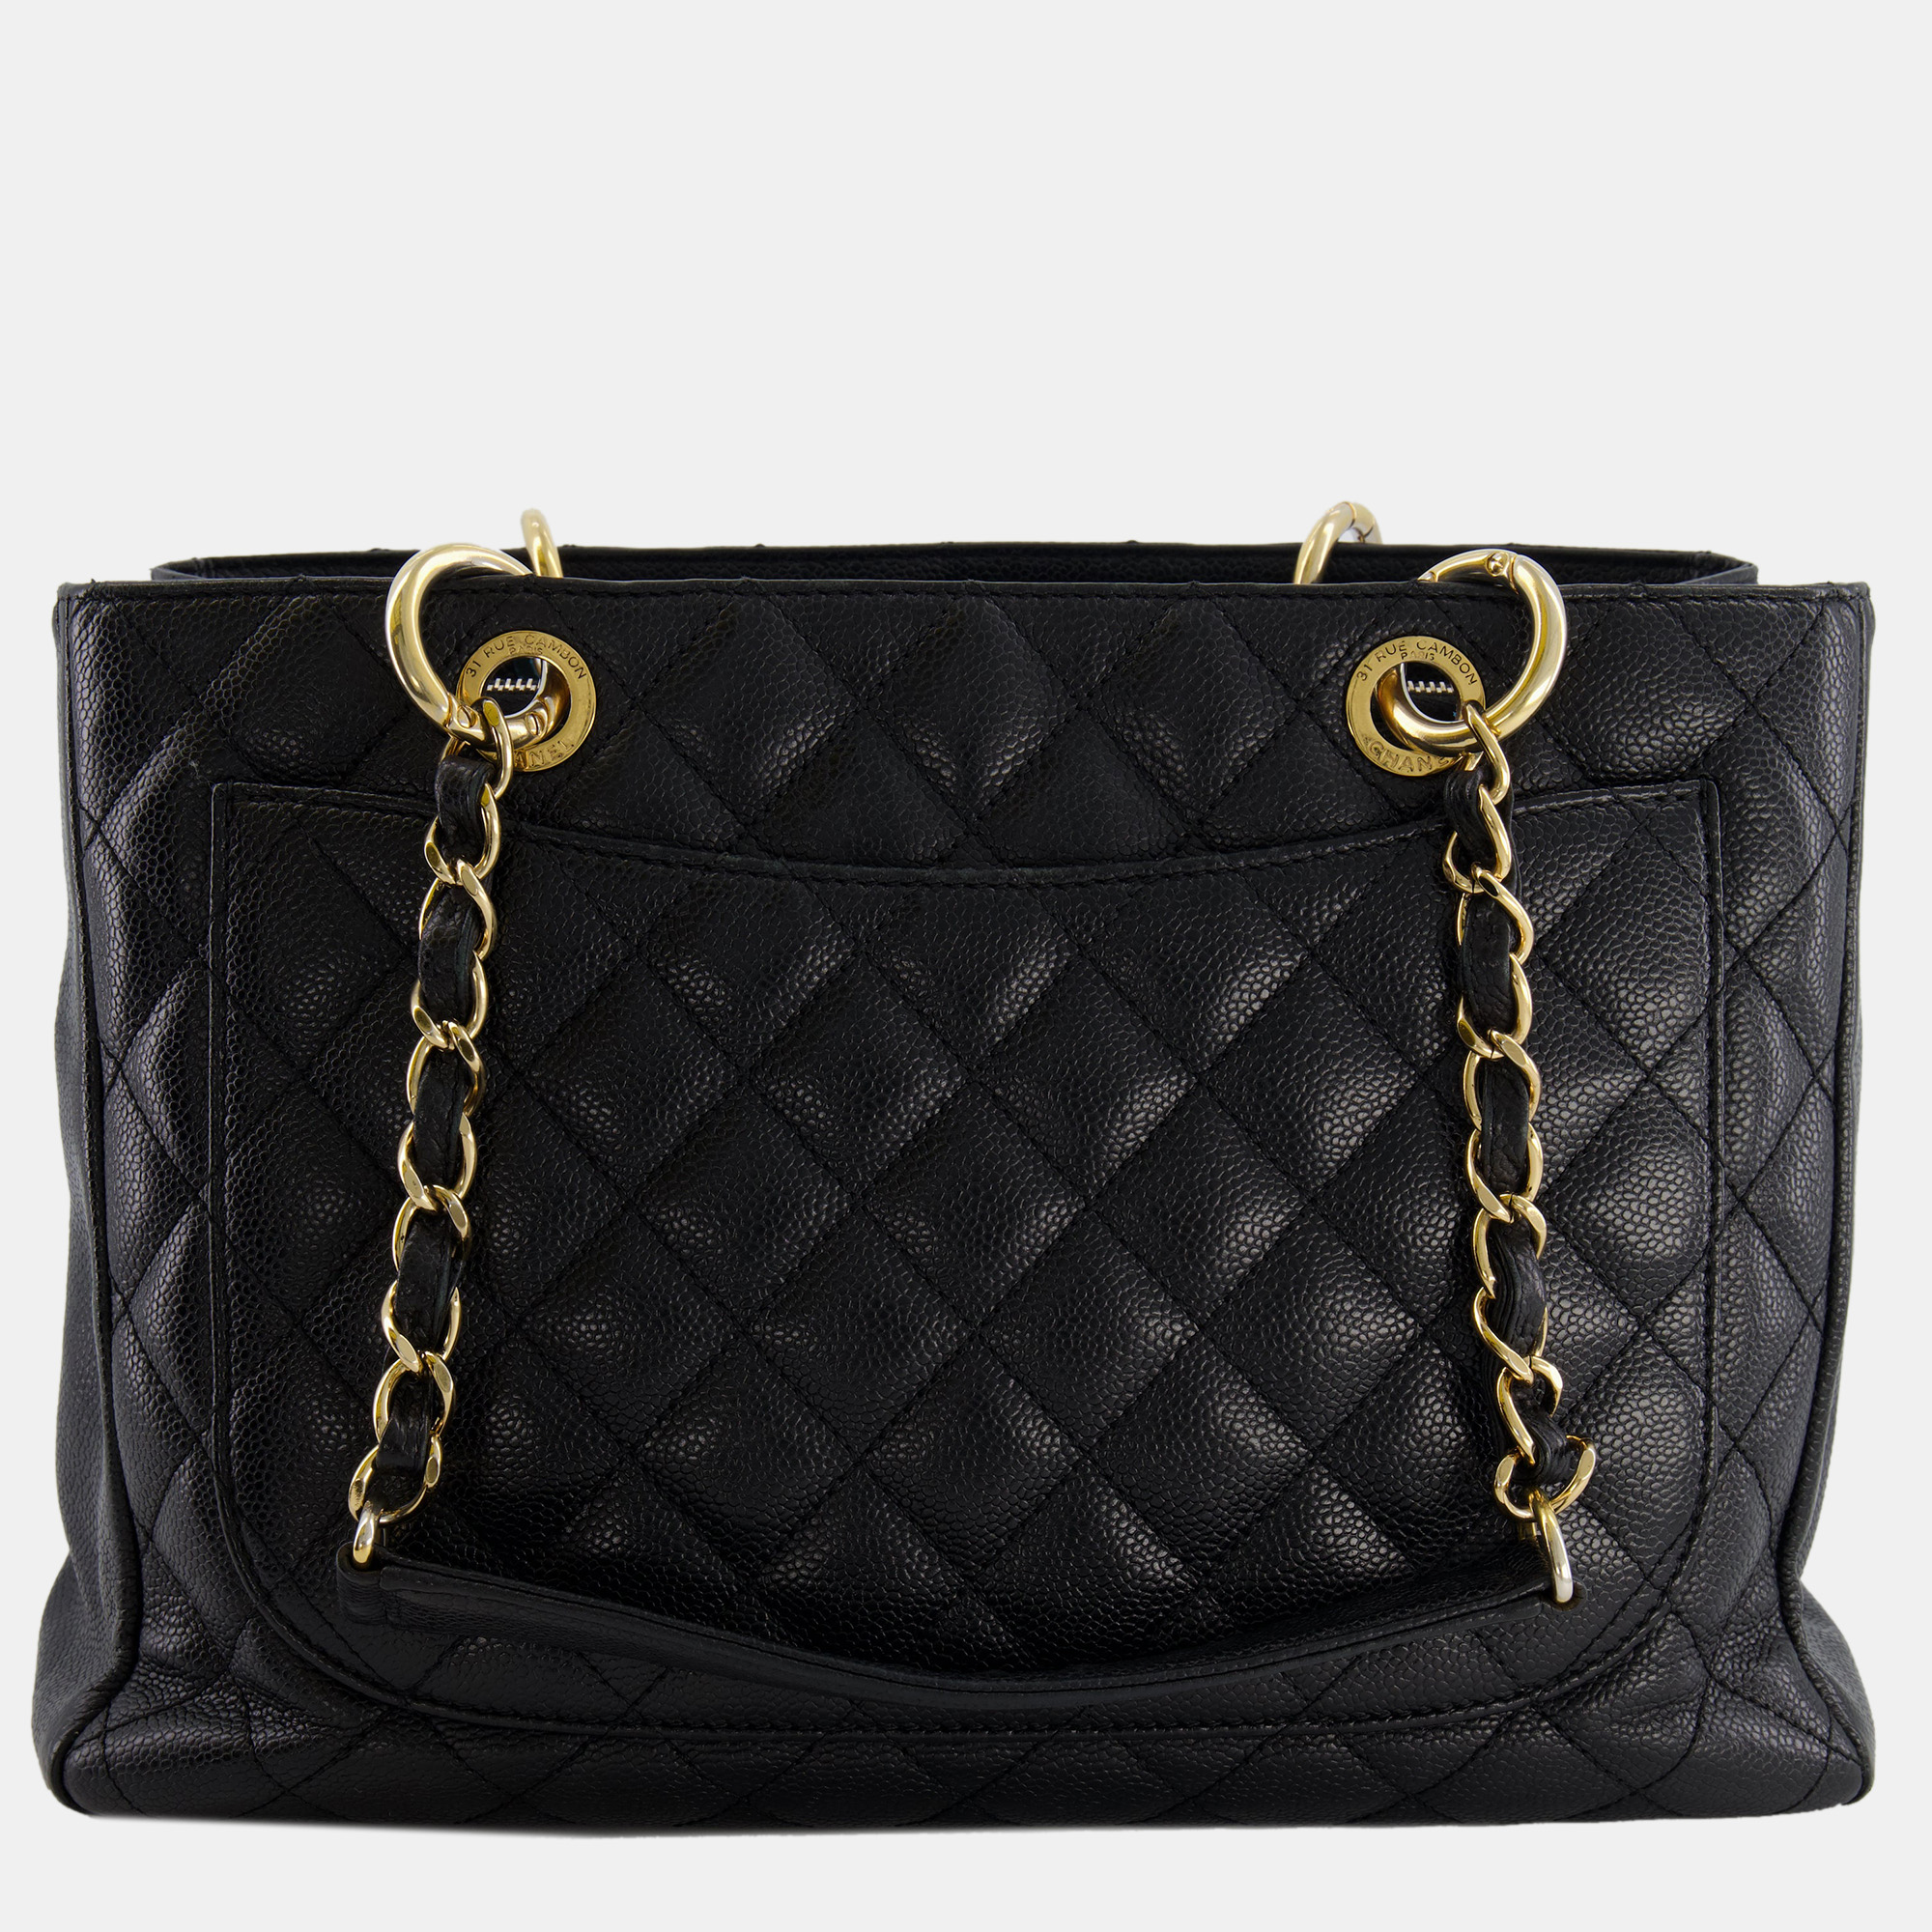 Chanel Black Caviar GST Grand Shopper Tote Bag With Gold Hardware